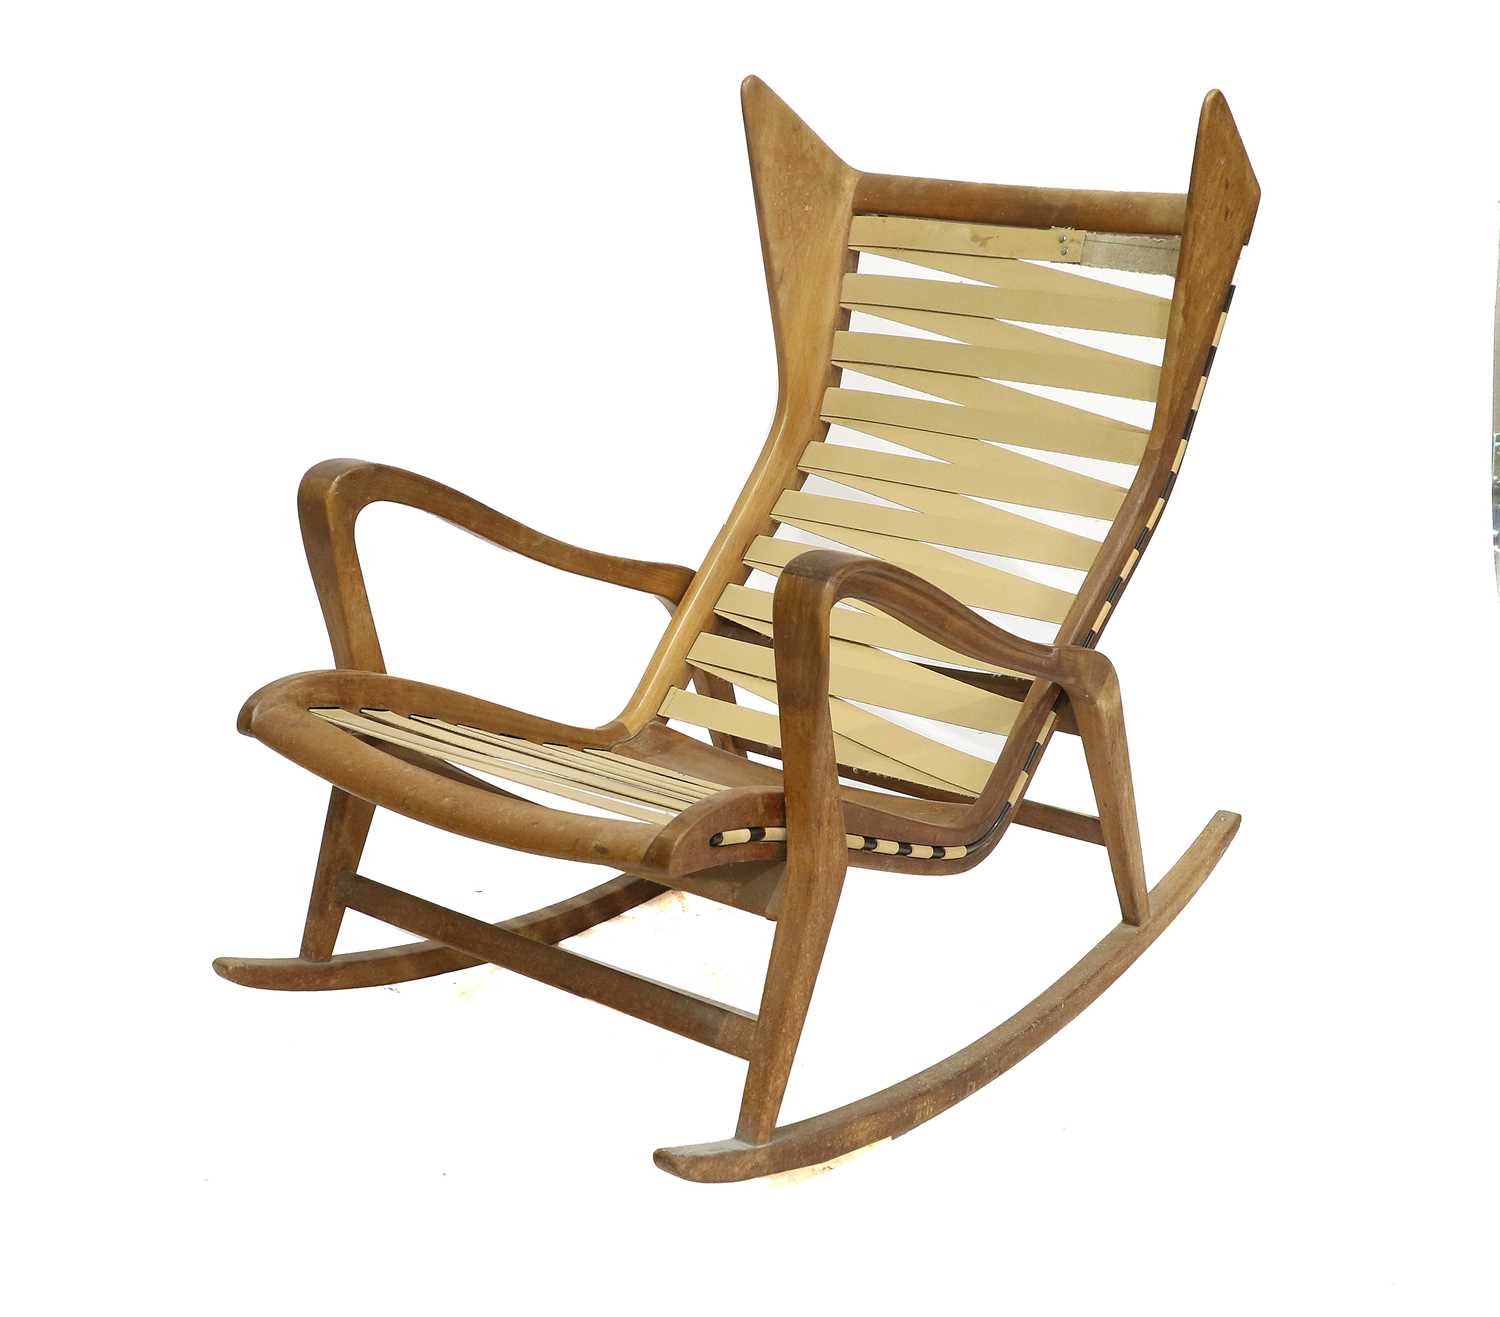 Cassina Studio Tecnico, Italy: A Walnut Rocking Chair, designed c.1955, model no.572, rubber - Image 2 of 2